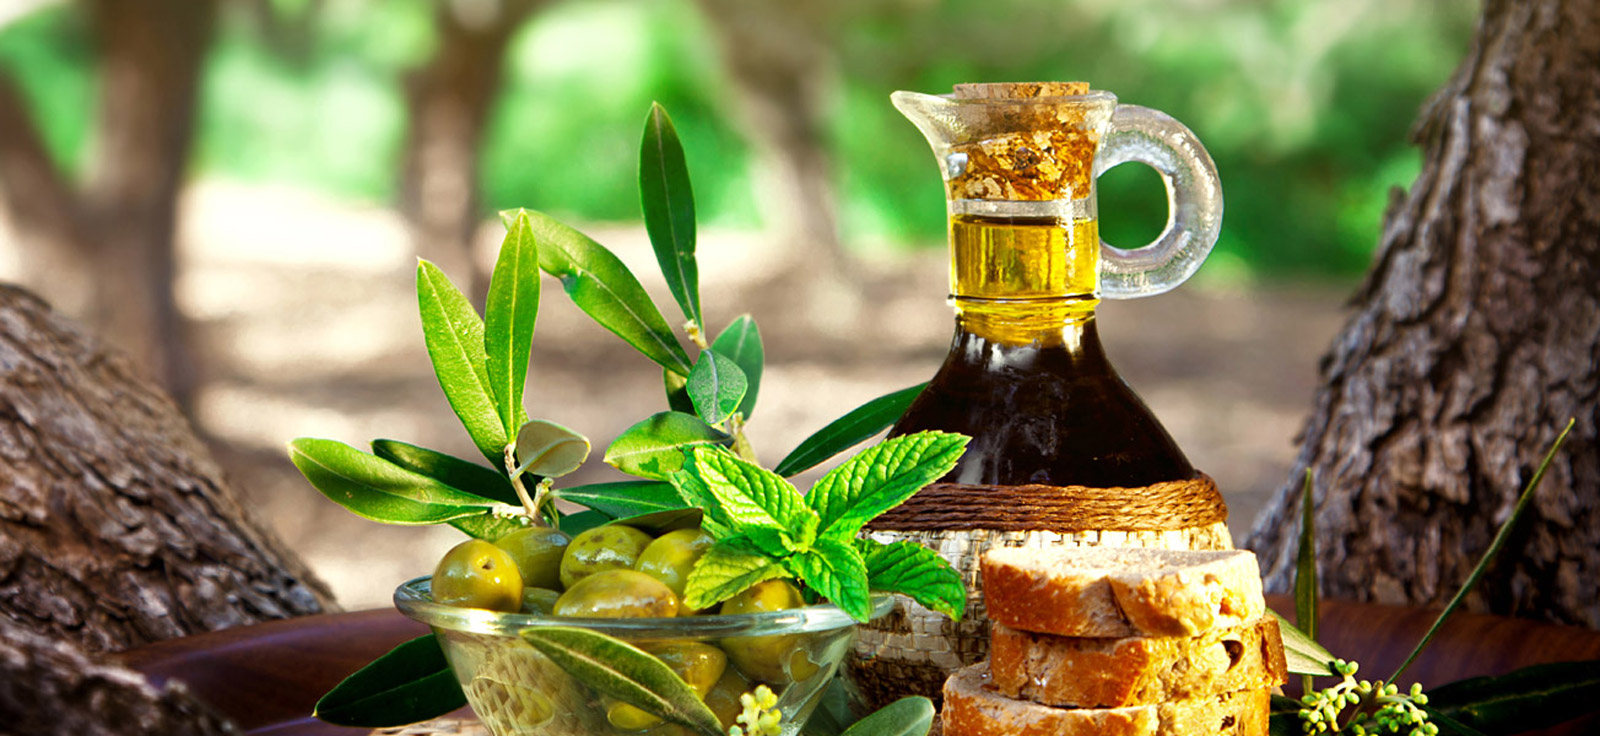 Cretan olives and olive oil